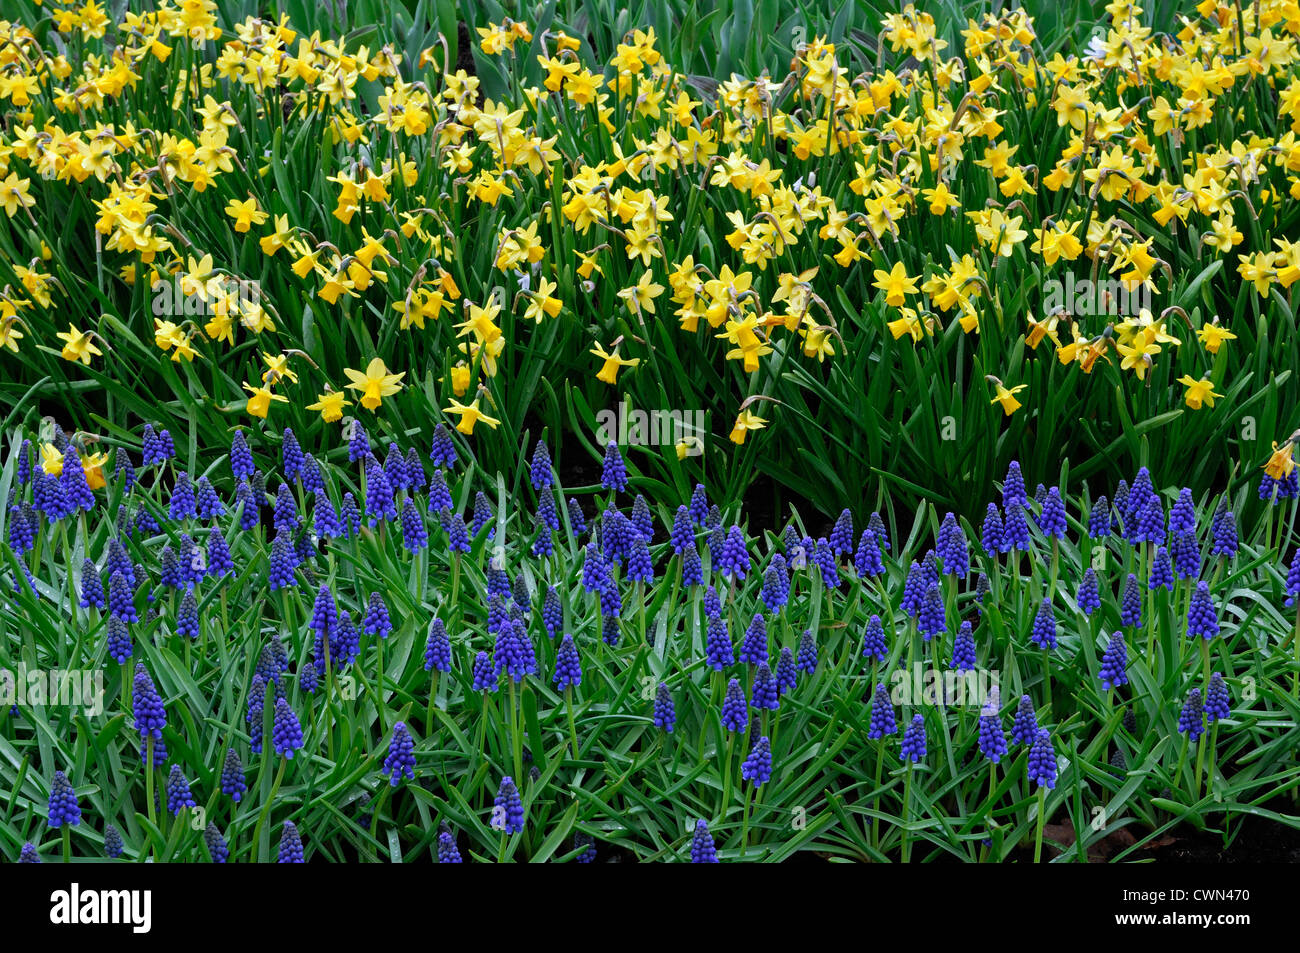 Narcissus tete a tete yellow dwarf daffodil blue muscari armeniacum mix  mixed planting scheme combination bulbs spring display Stock Photo - Alamy